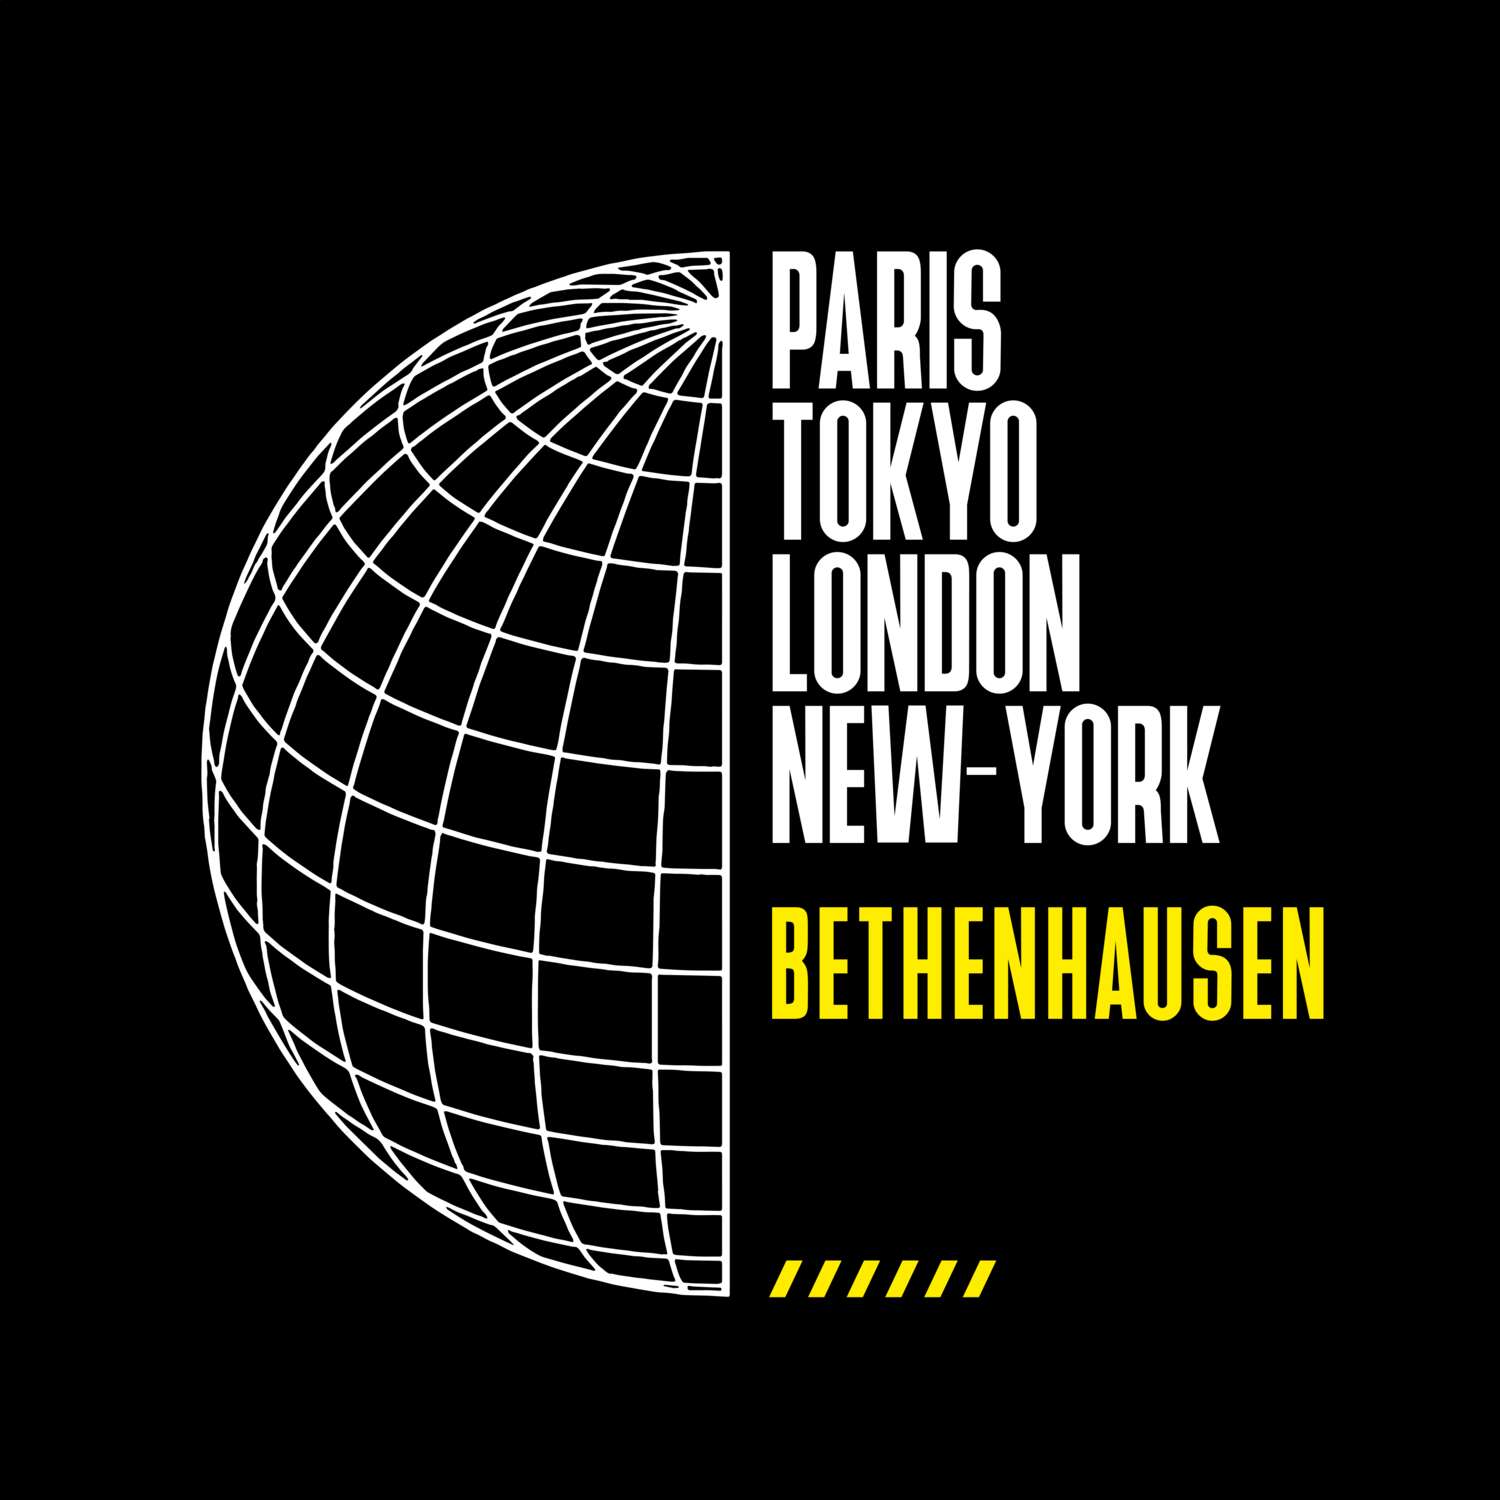 Bethenhausen T-Shirt »Paris Tokyo London«